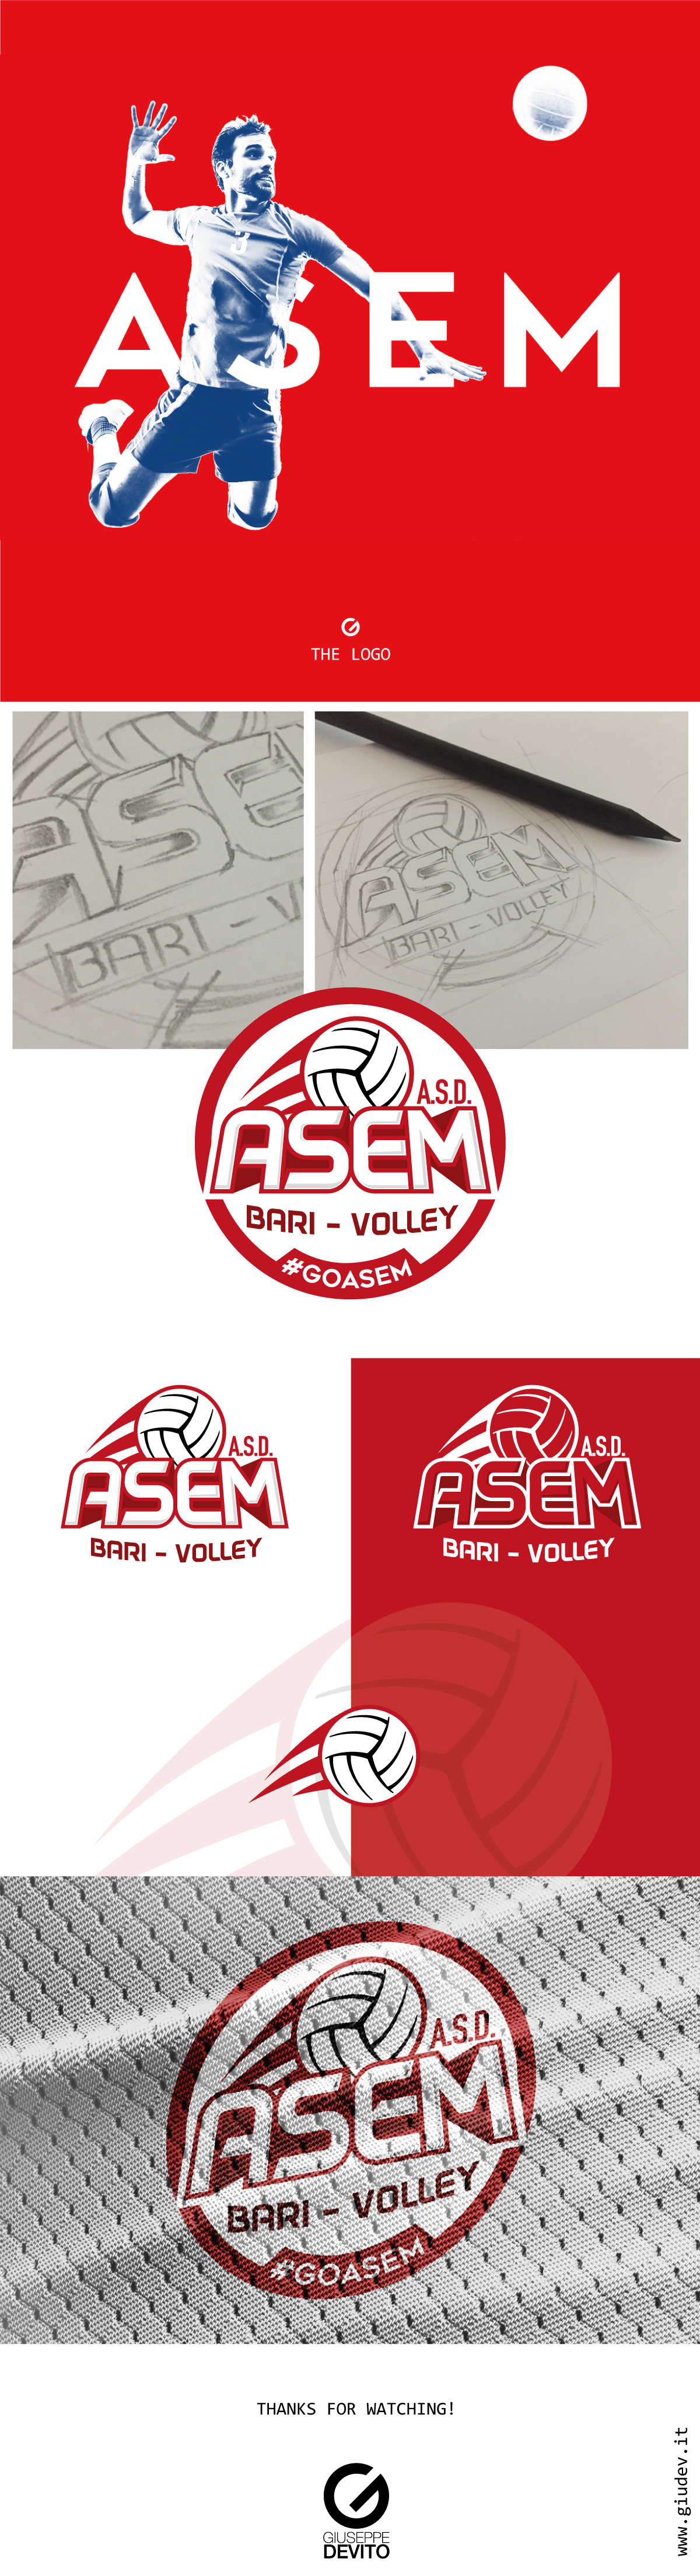 asem-bari-volley-logo-design